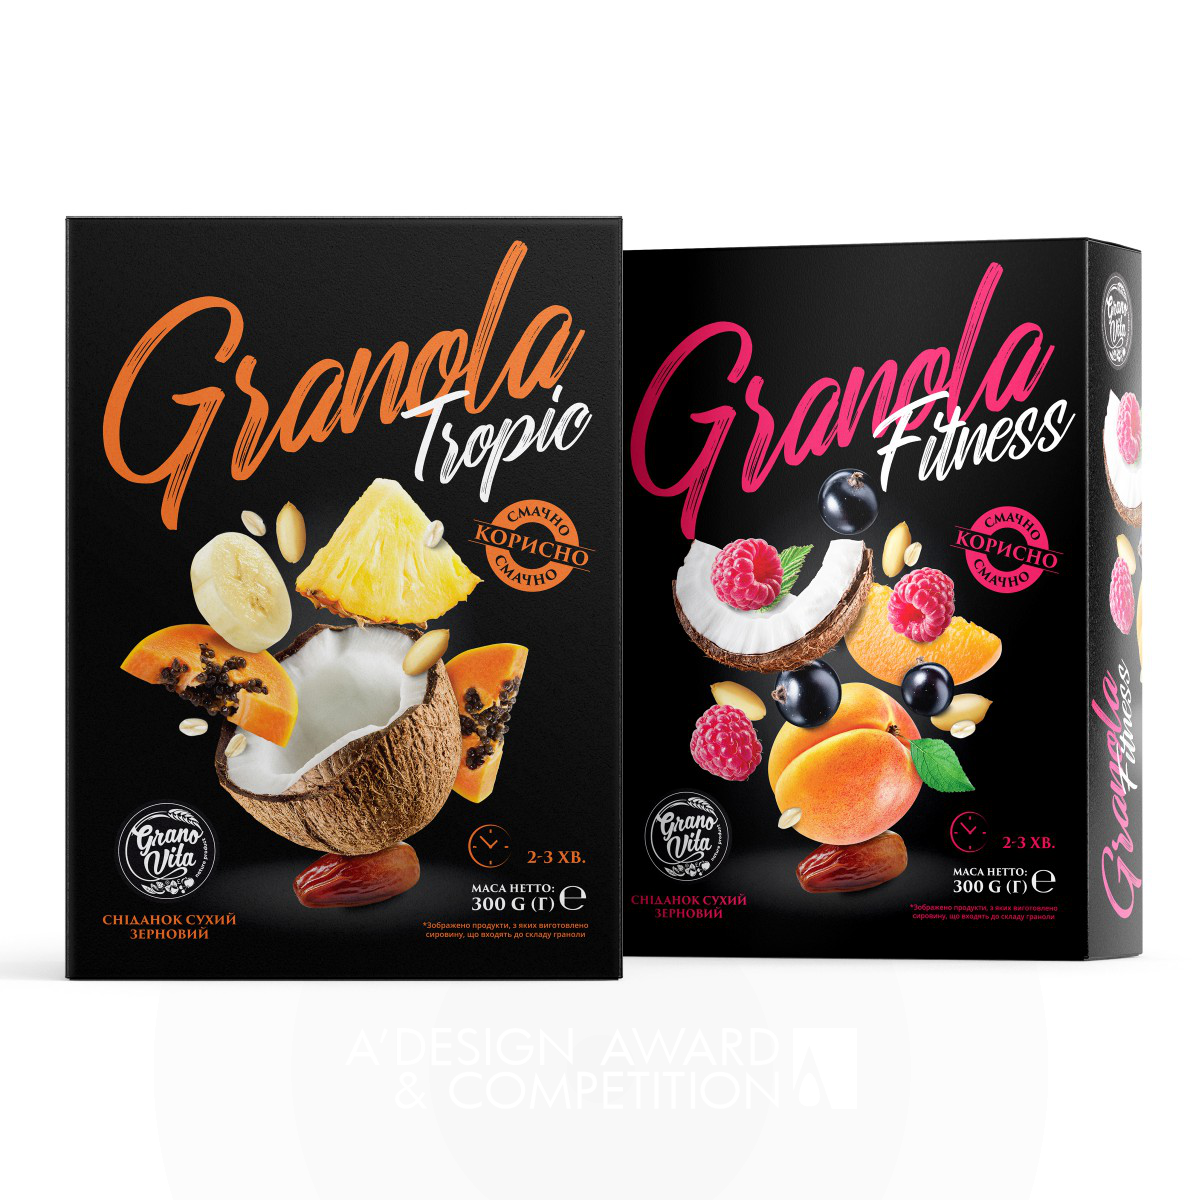 Granovita : Un Emballage de Granola qui Allie Santé et Design Moderne